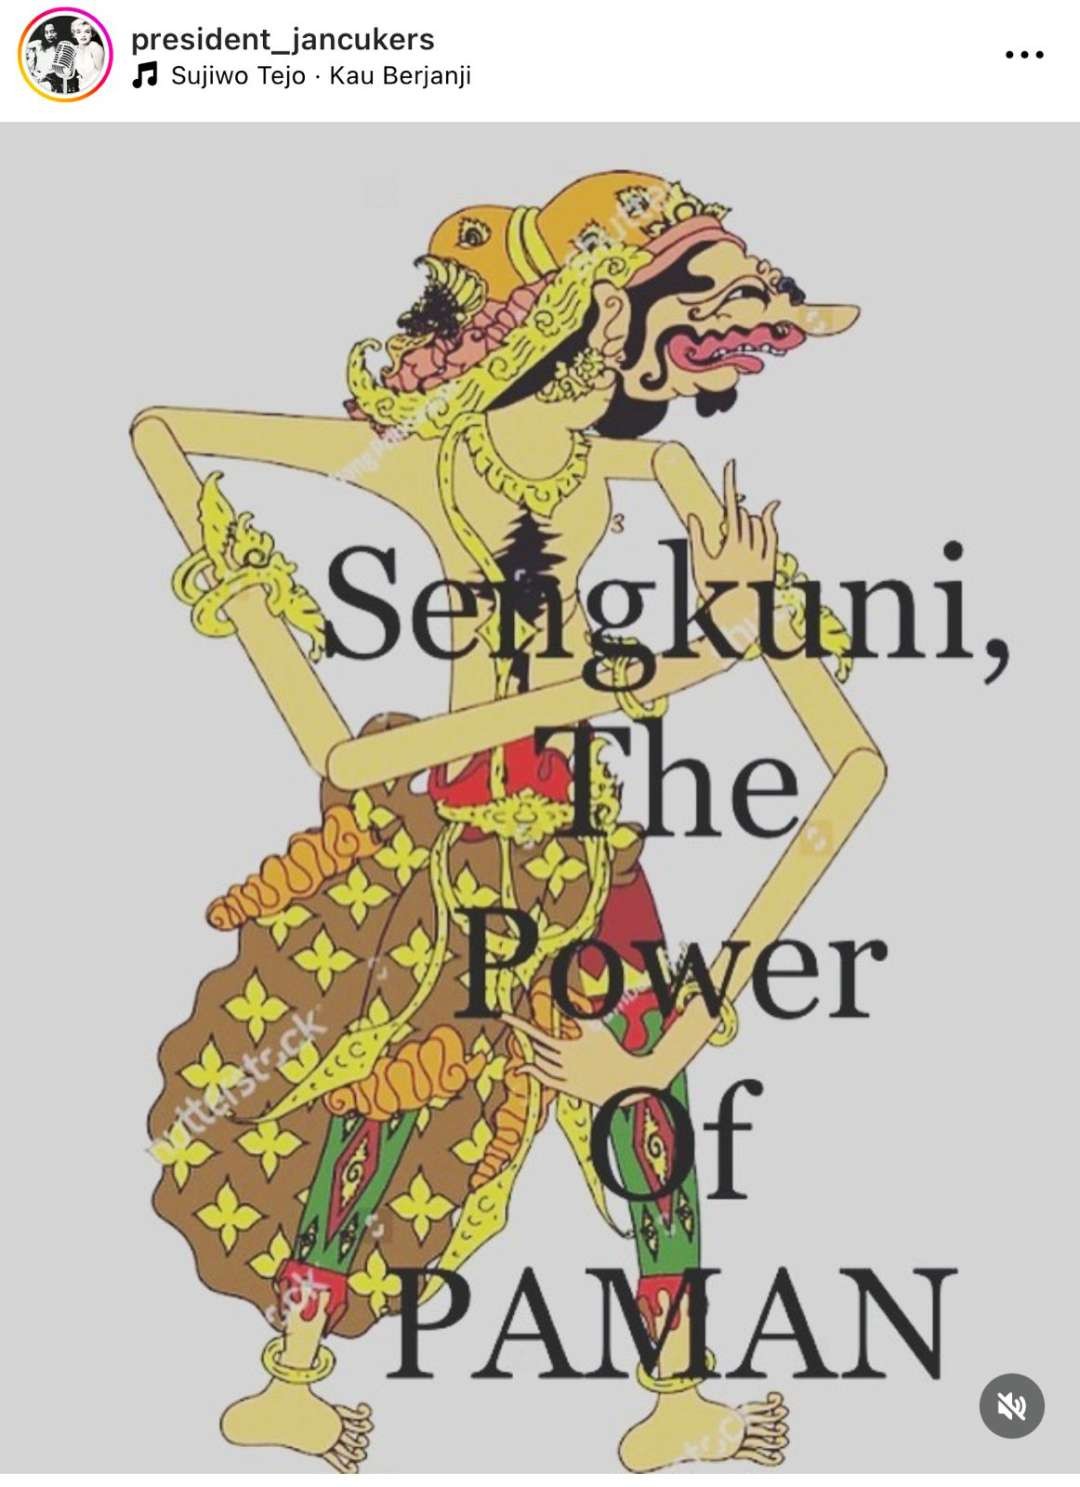 Lakon Sengkuni yang digambarkan Budayawan, Sujiwo Tejo. (Instagram @president_jancukers)